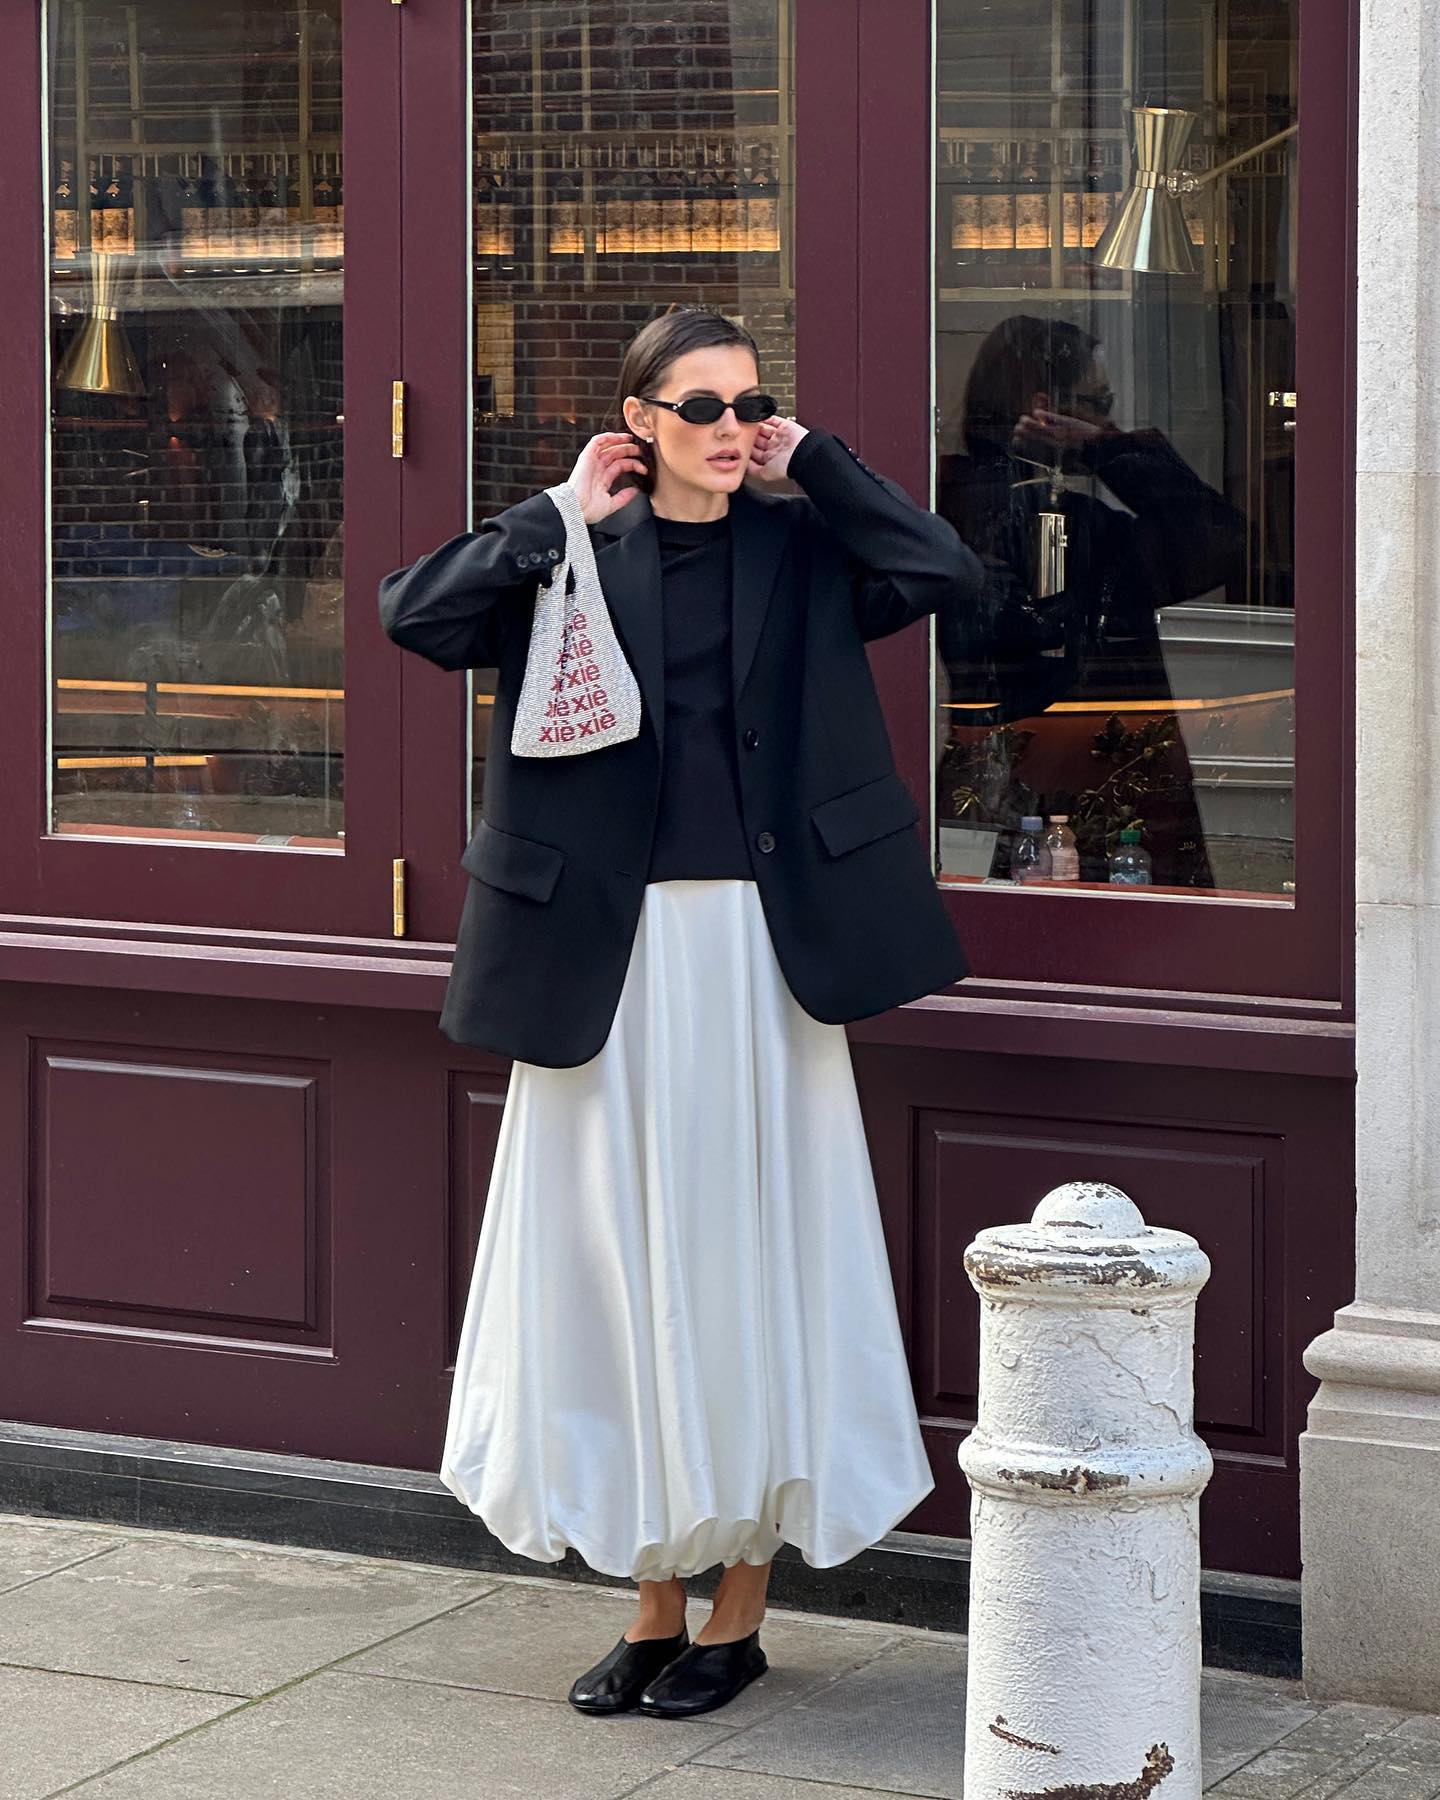 stylish woman poses on the sidewalks of London in black oval sunglasses, a black blazer, black top, white bubble hem skirt and black flats